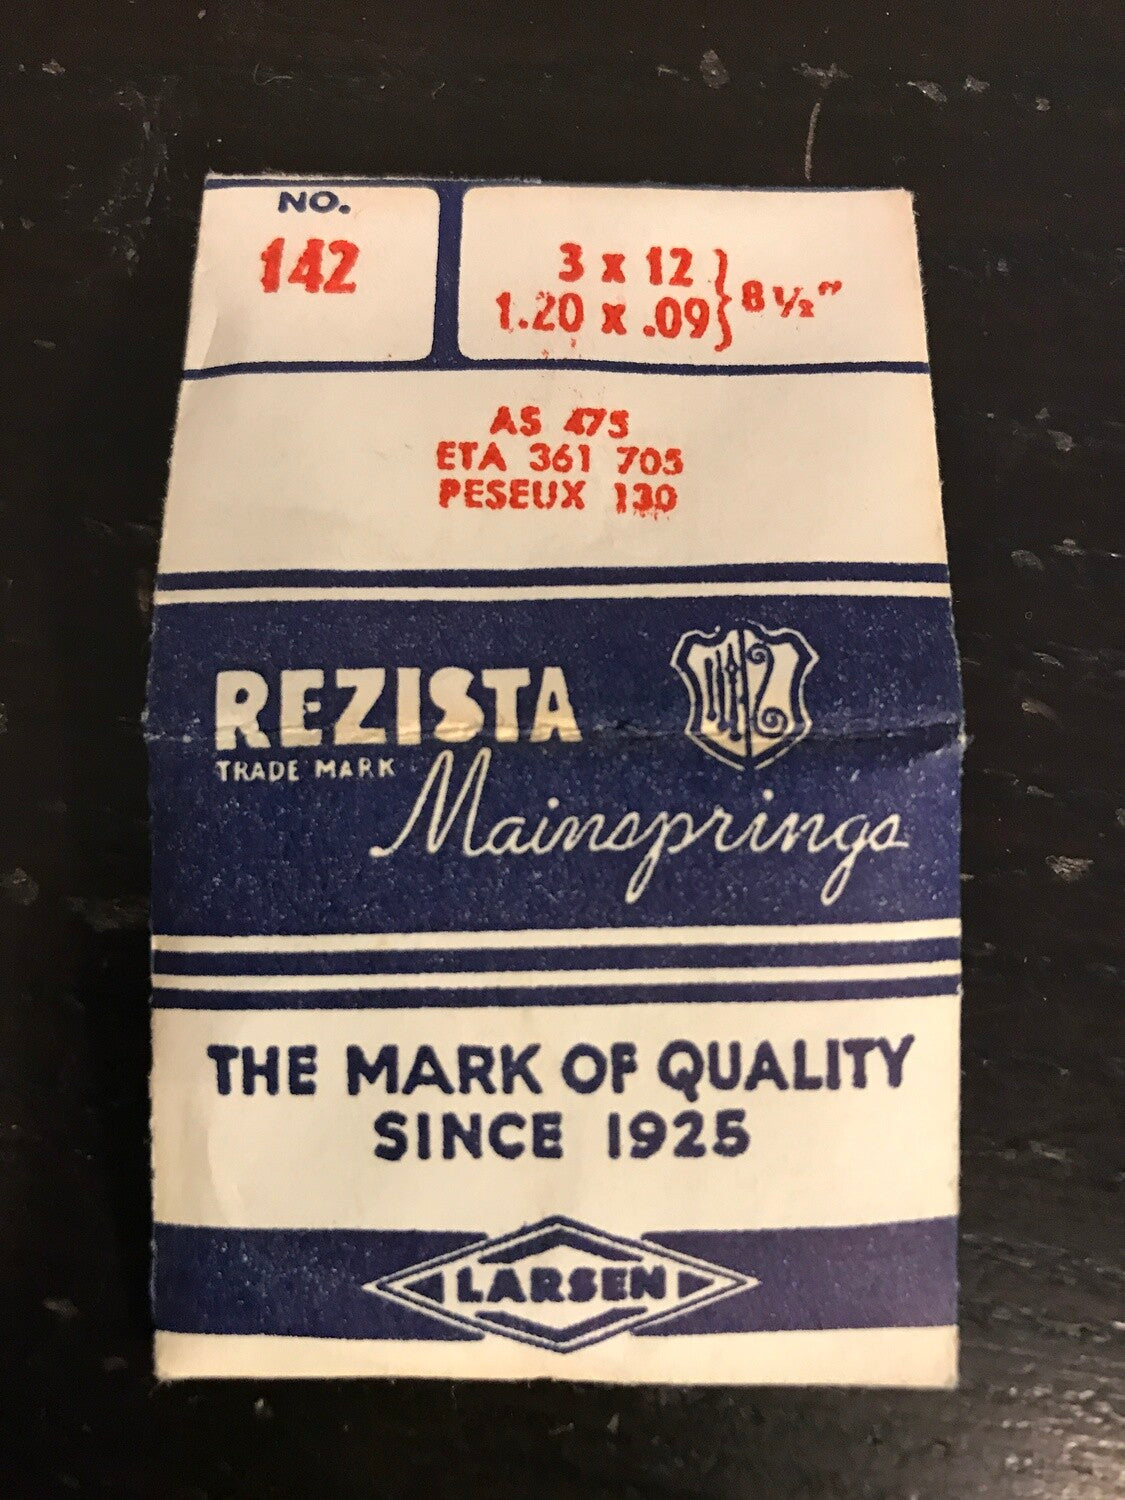 Rezista Mainspring No. 142 for AS 475, ETA 361, 705 & Peseux 130 - steel